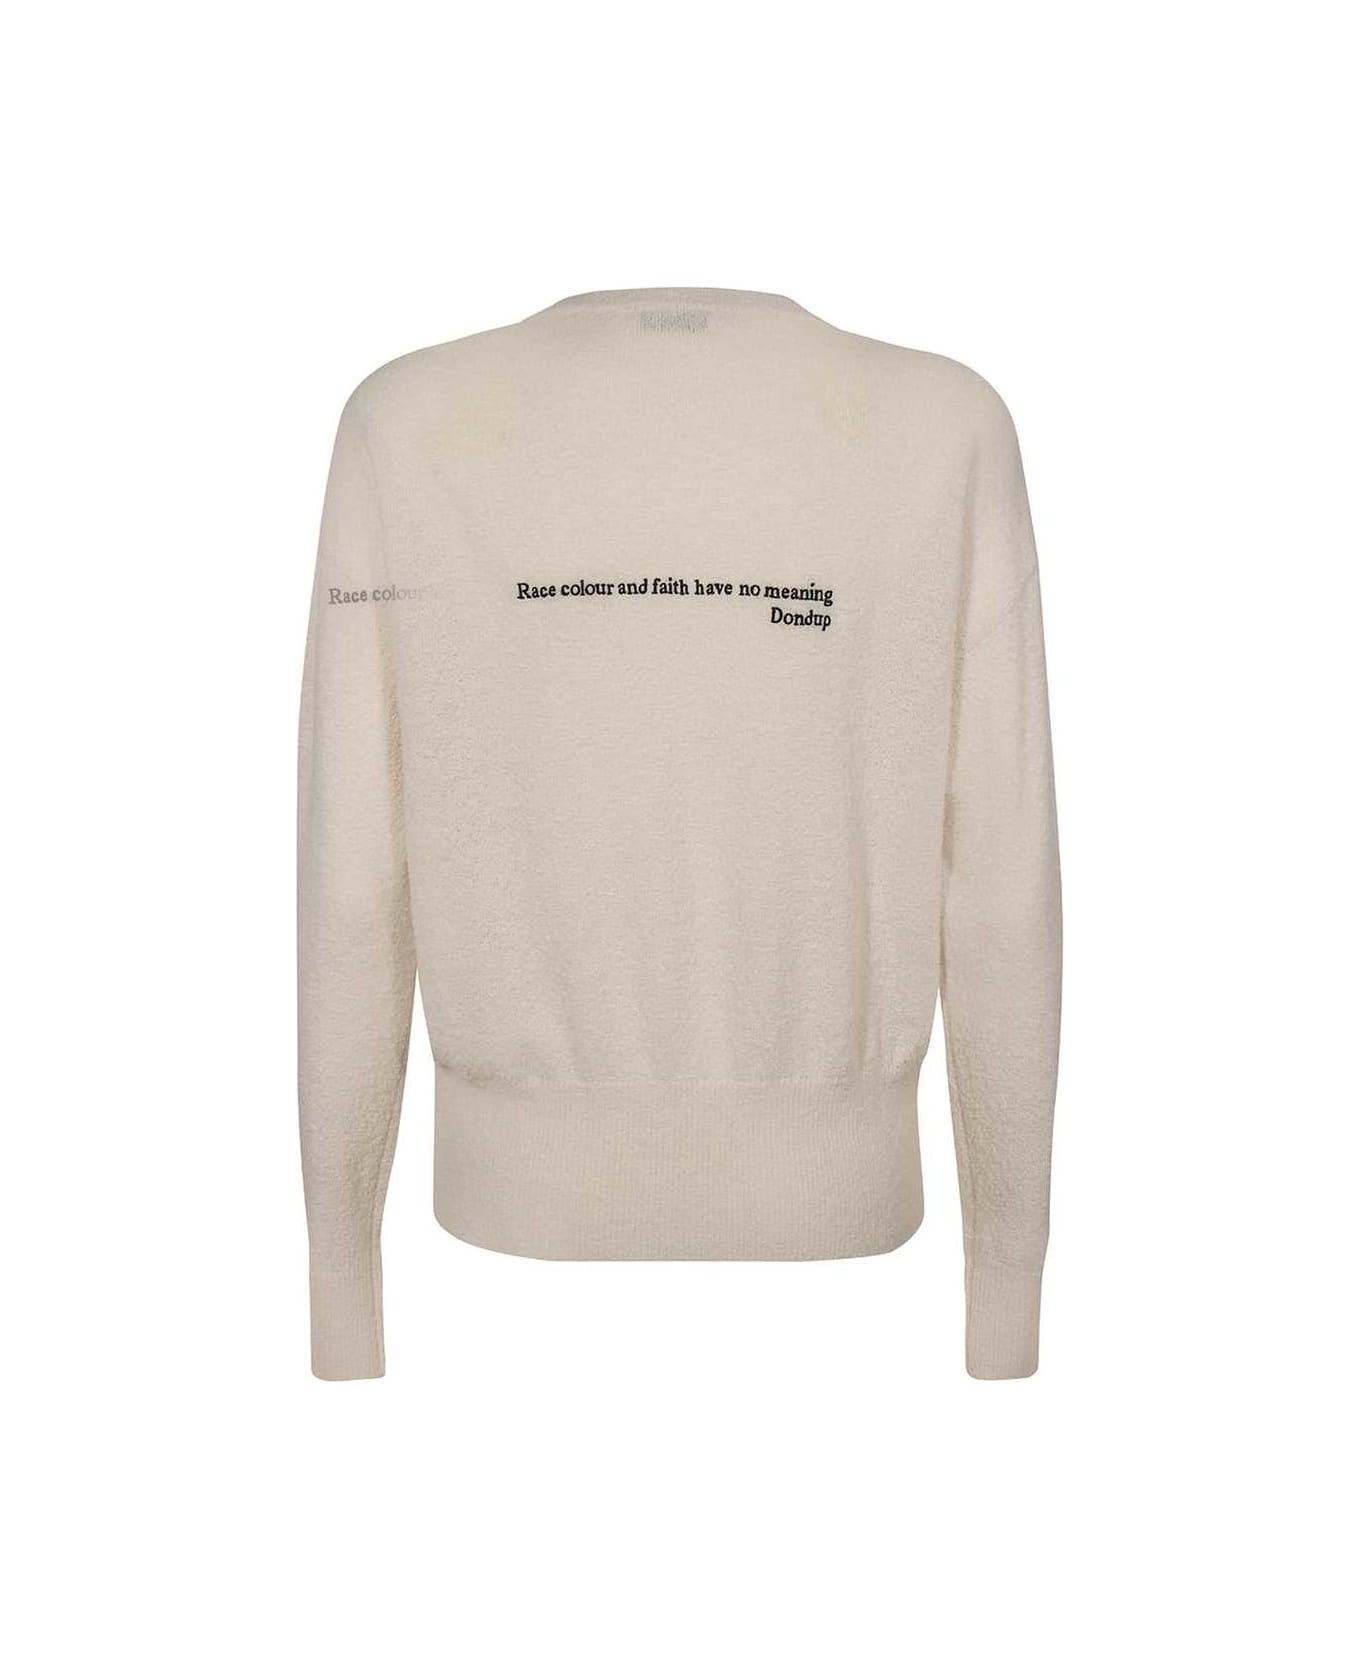 Dondup Long Sleeve Sweater - Beige